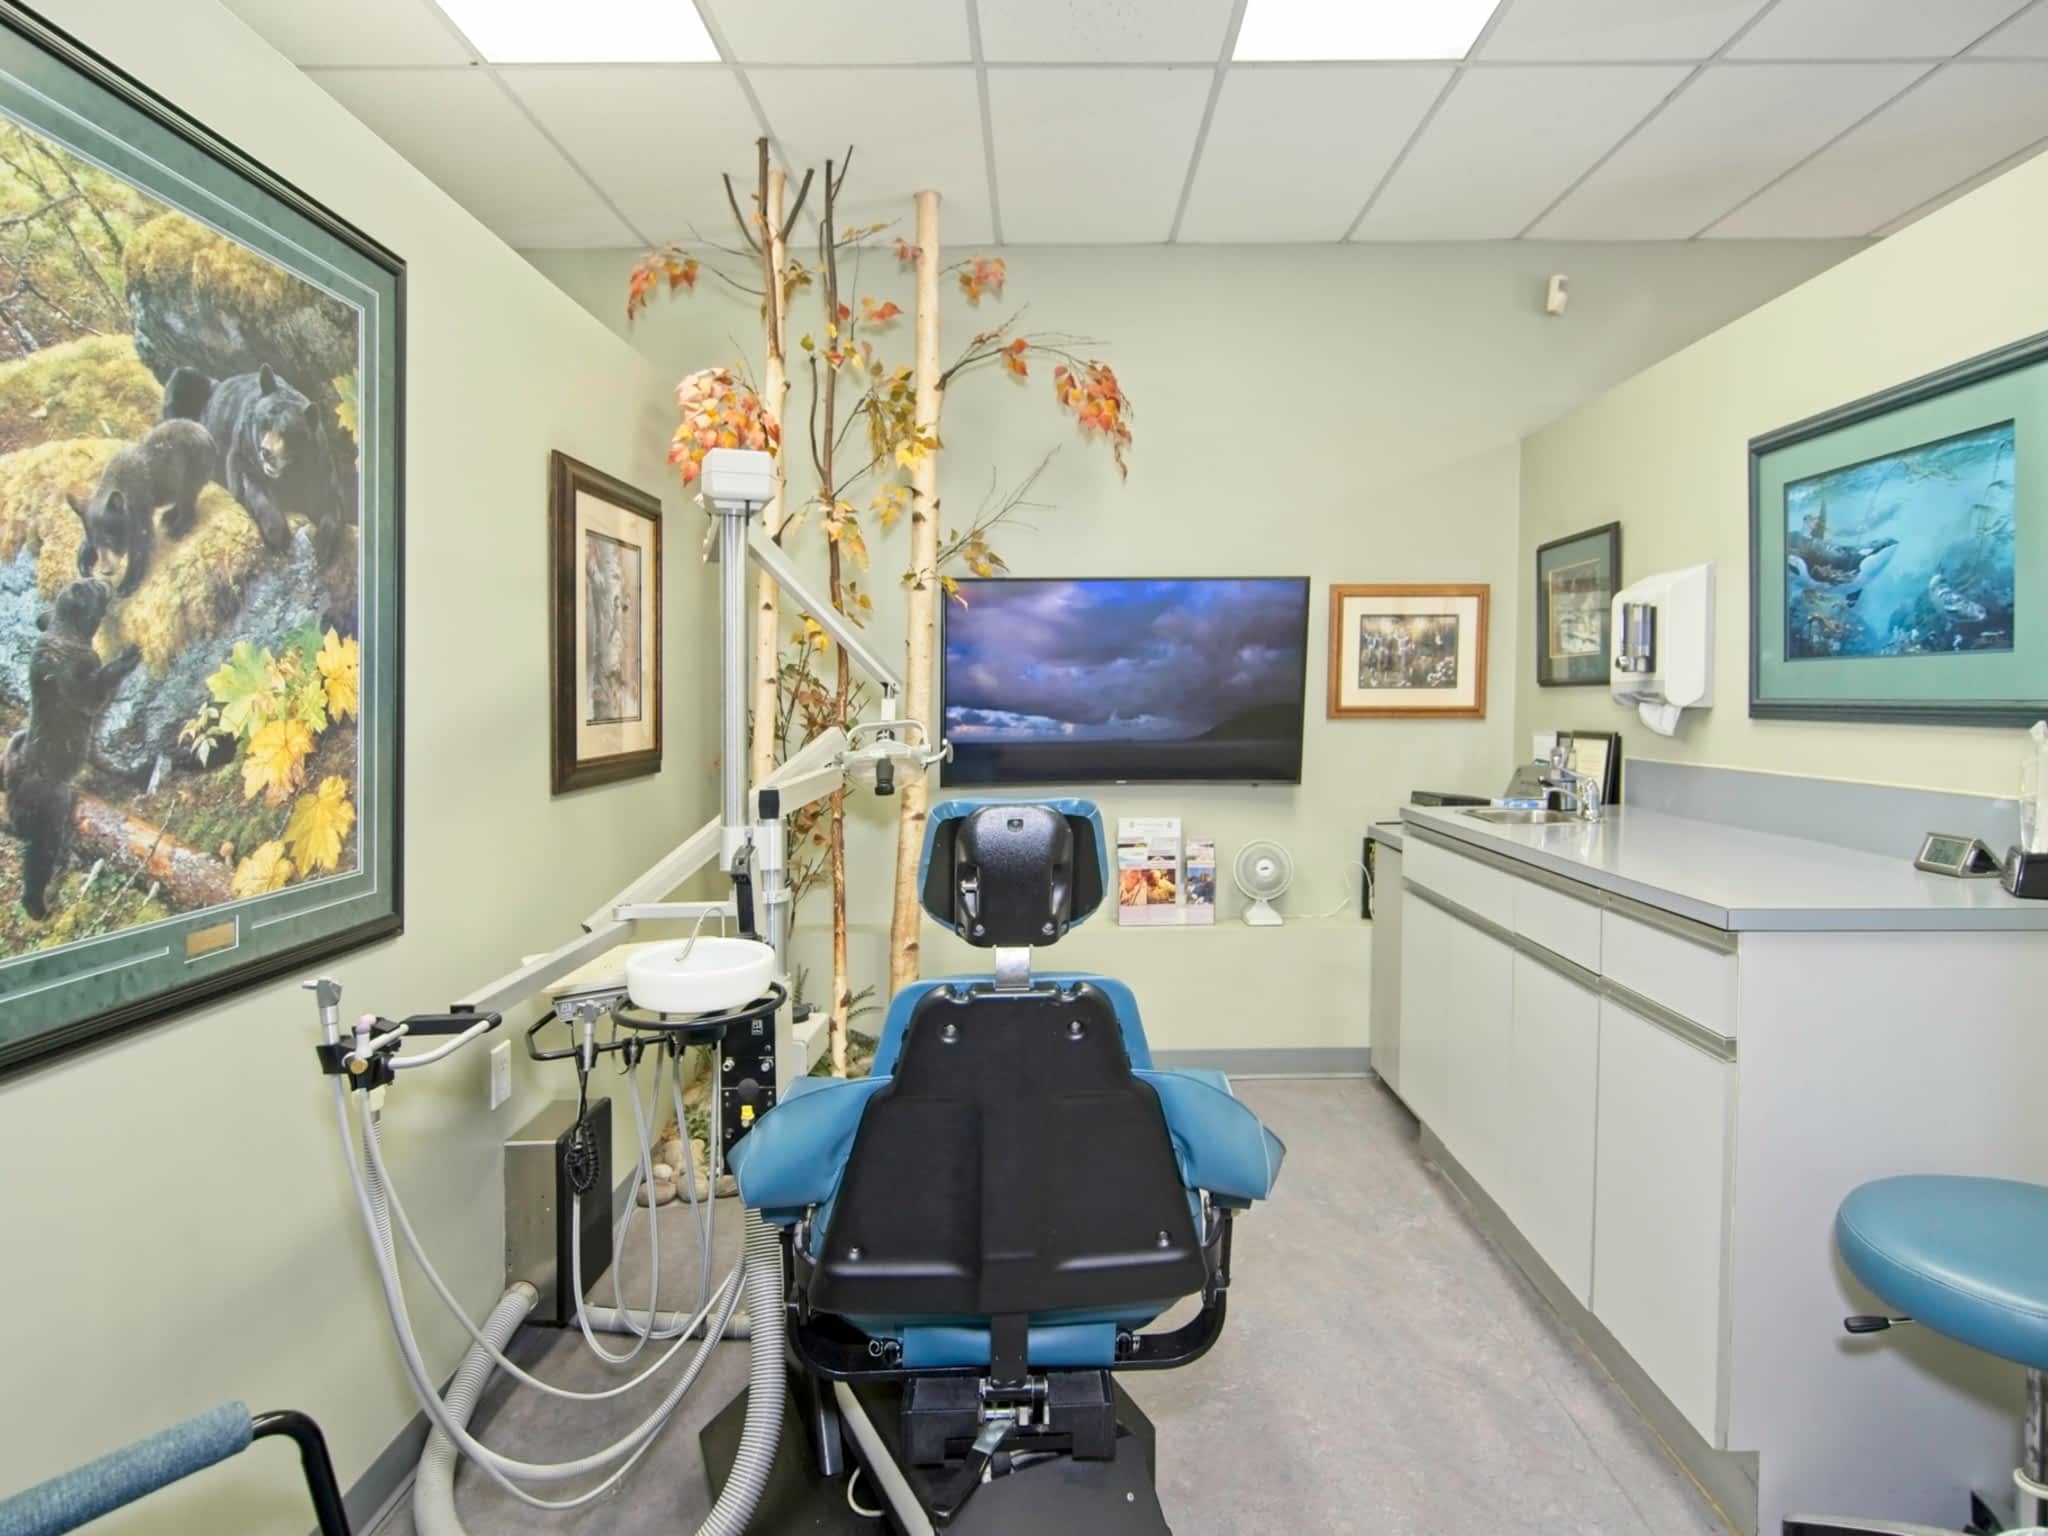 photo Trask Denture Clinic